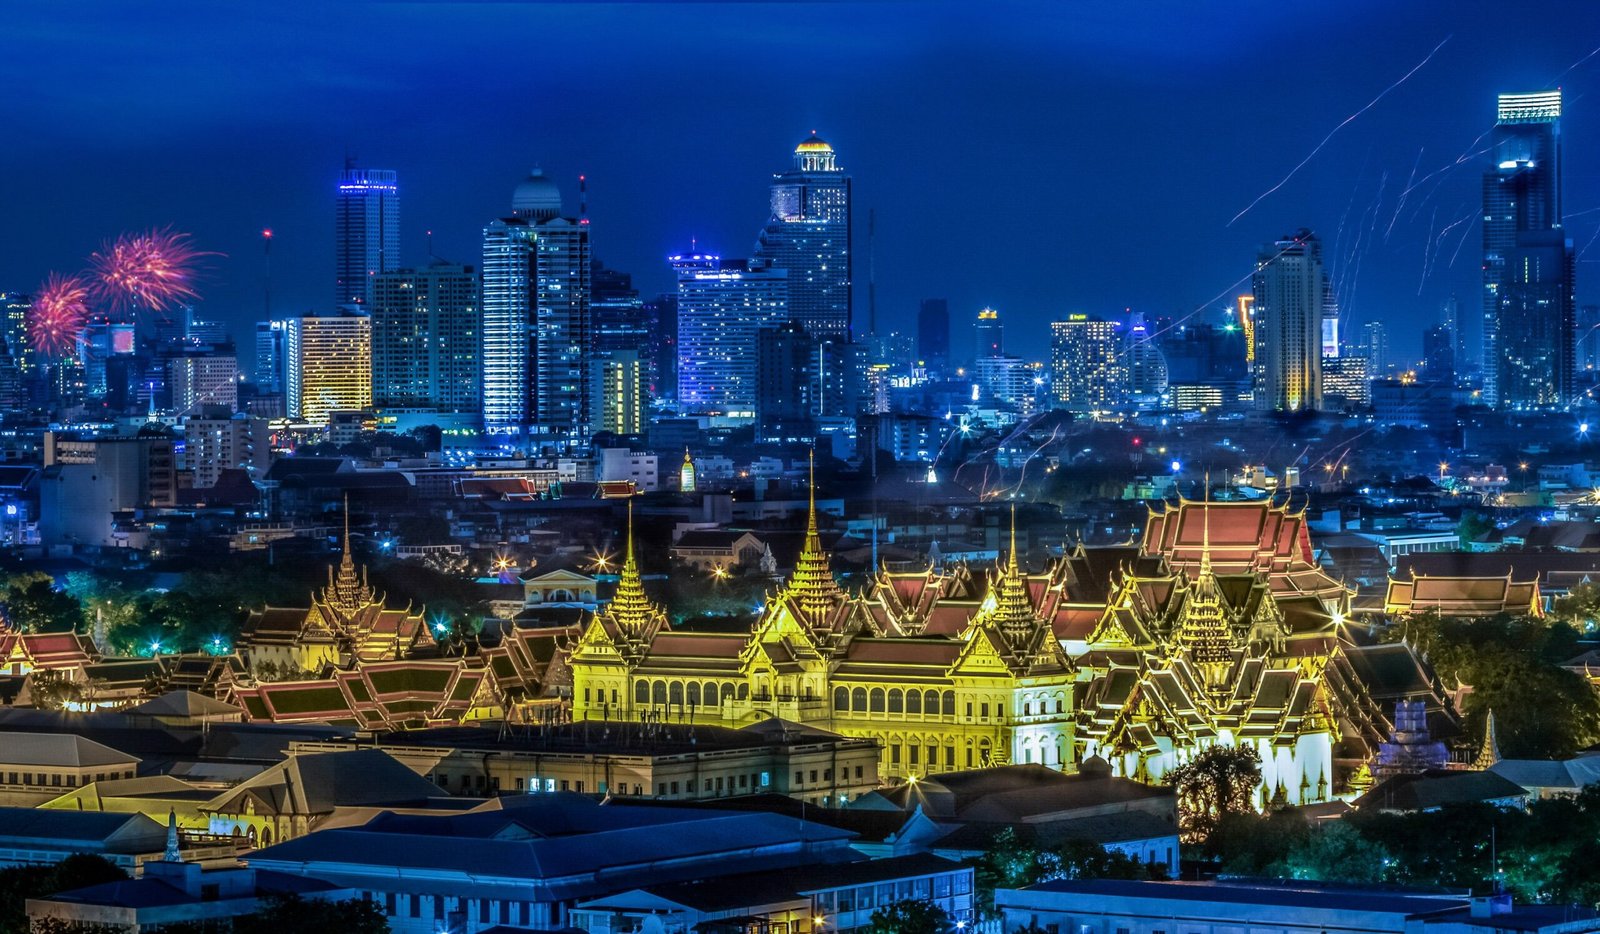 Best Cities in Thailand